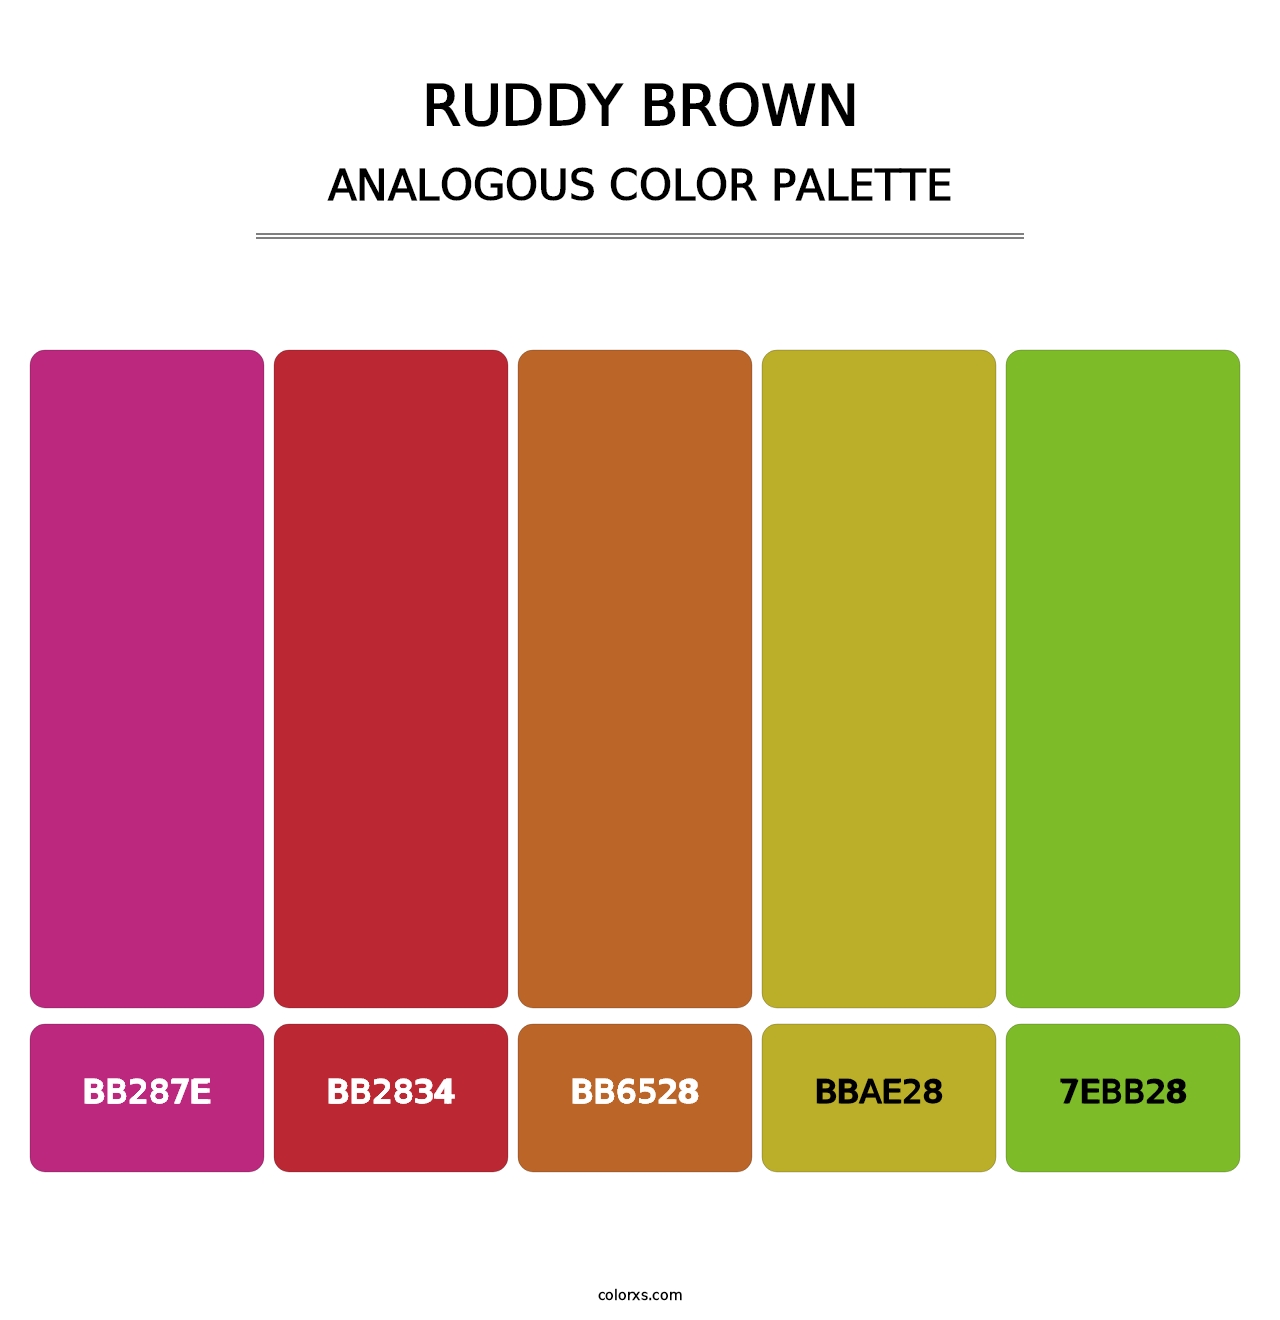 Ruddy Brown - Analogous Color Palette